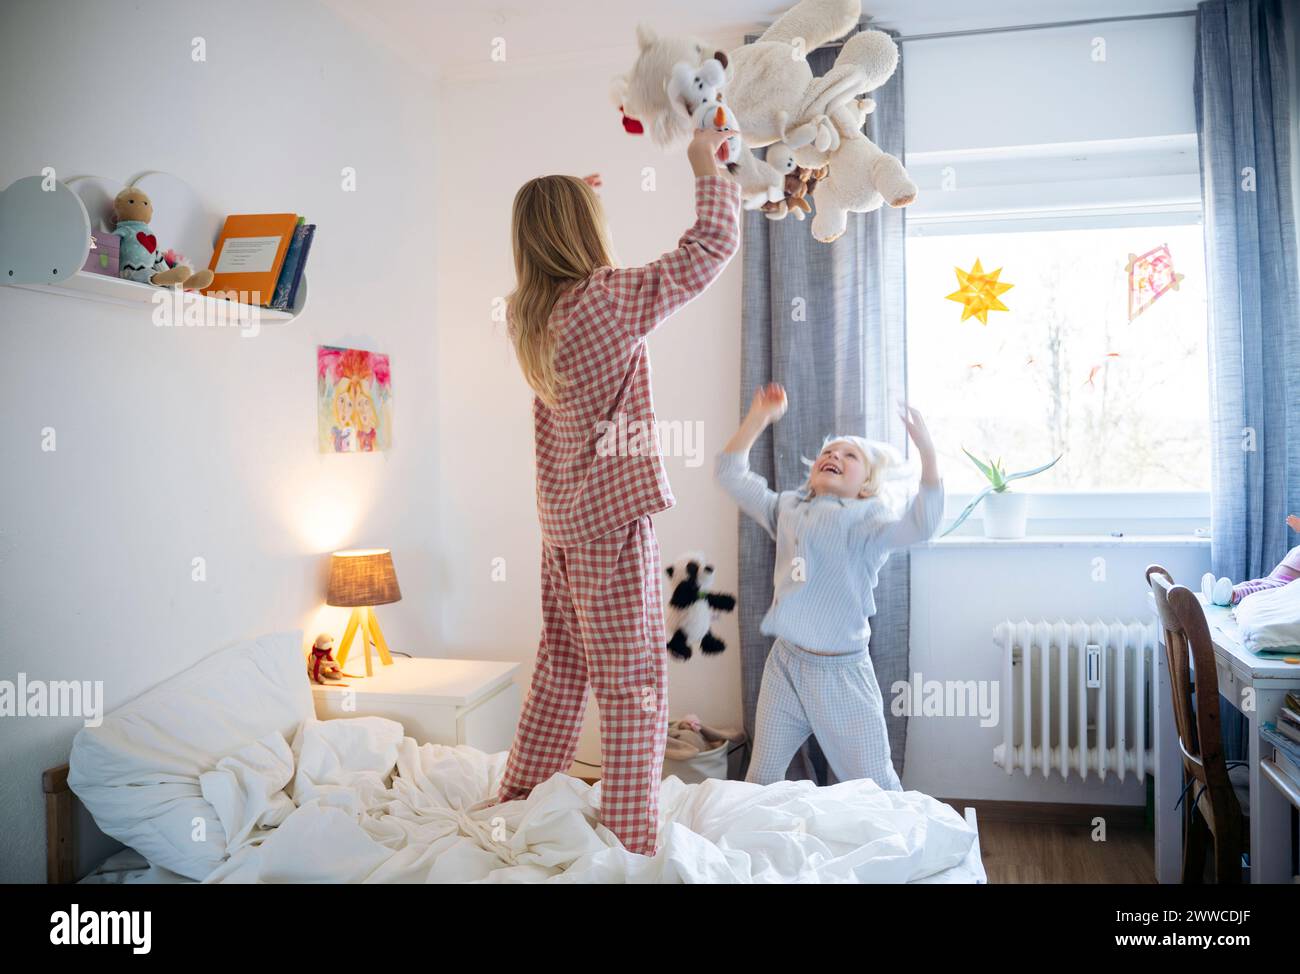 Playful siblings throwing teddy bear in bedroom at home Stock Photo